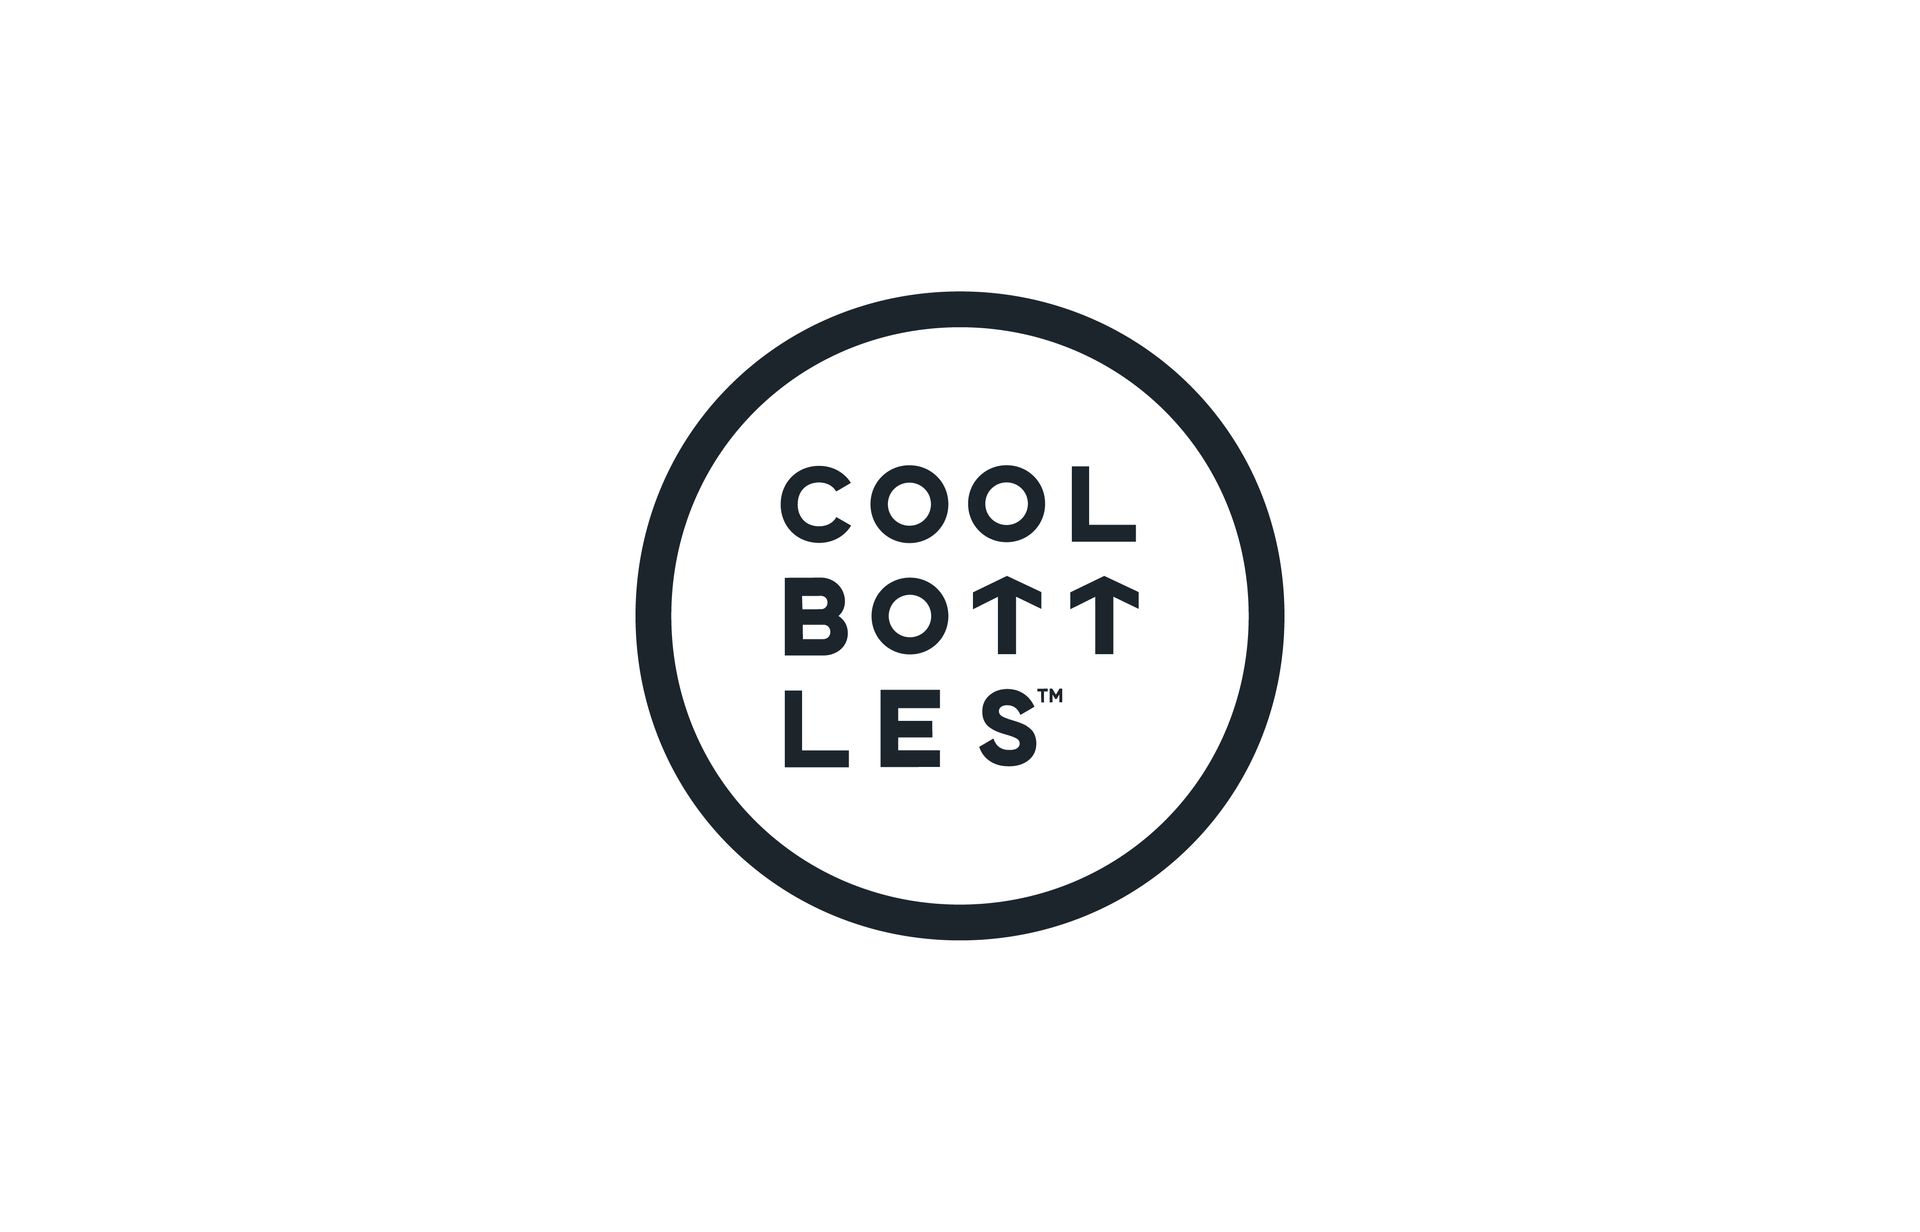 Exclusive Cool Bottles brand logo